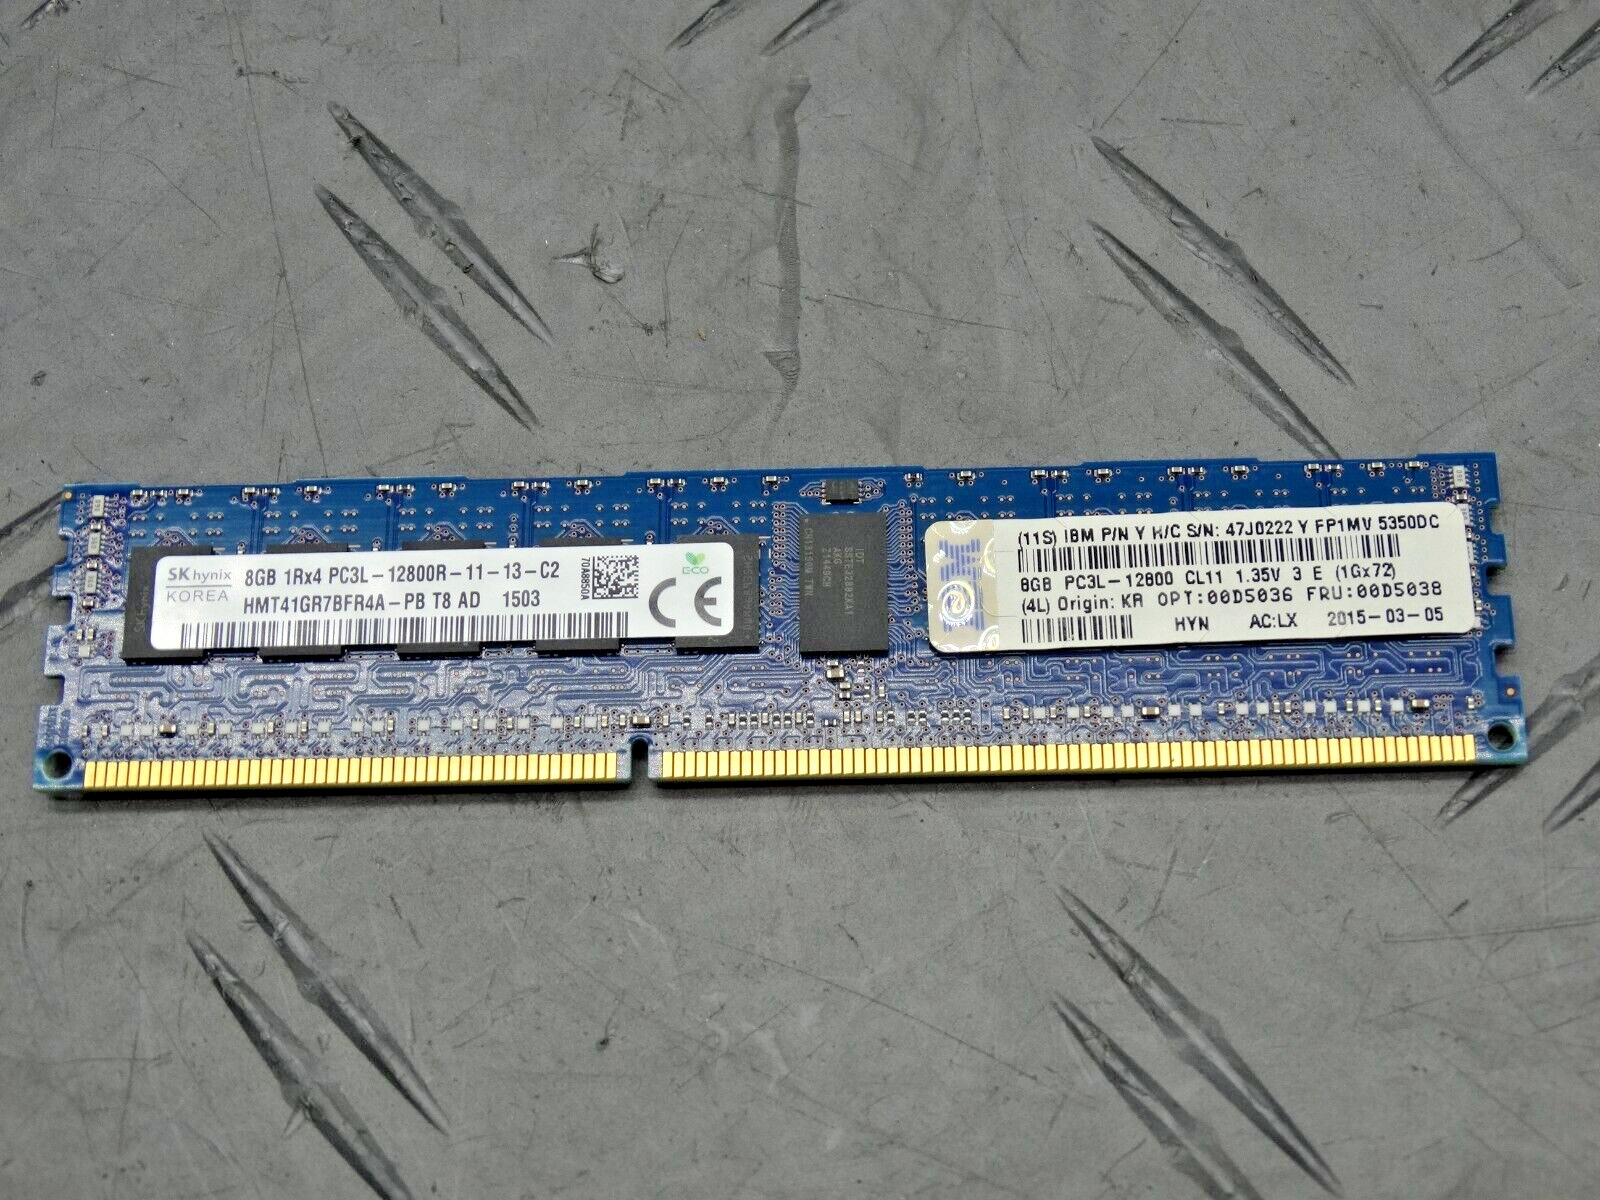 SK Hynix 8GB Server RAM Memory PC3L-12800R-11-13-C2 8GB total